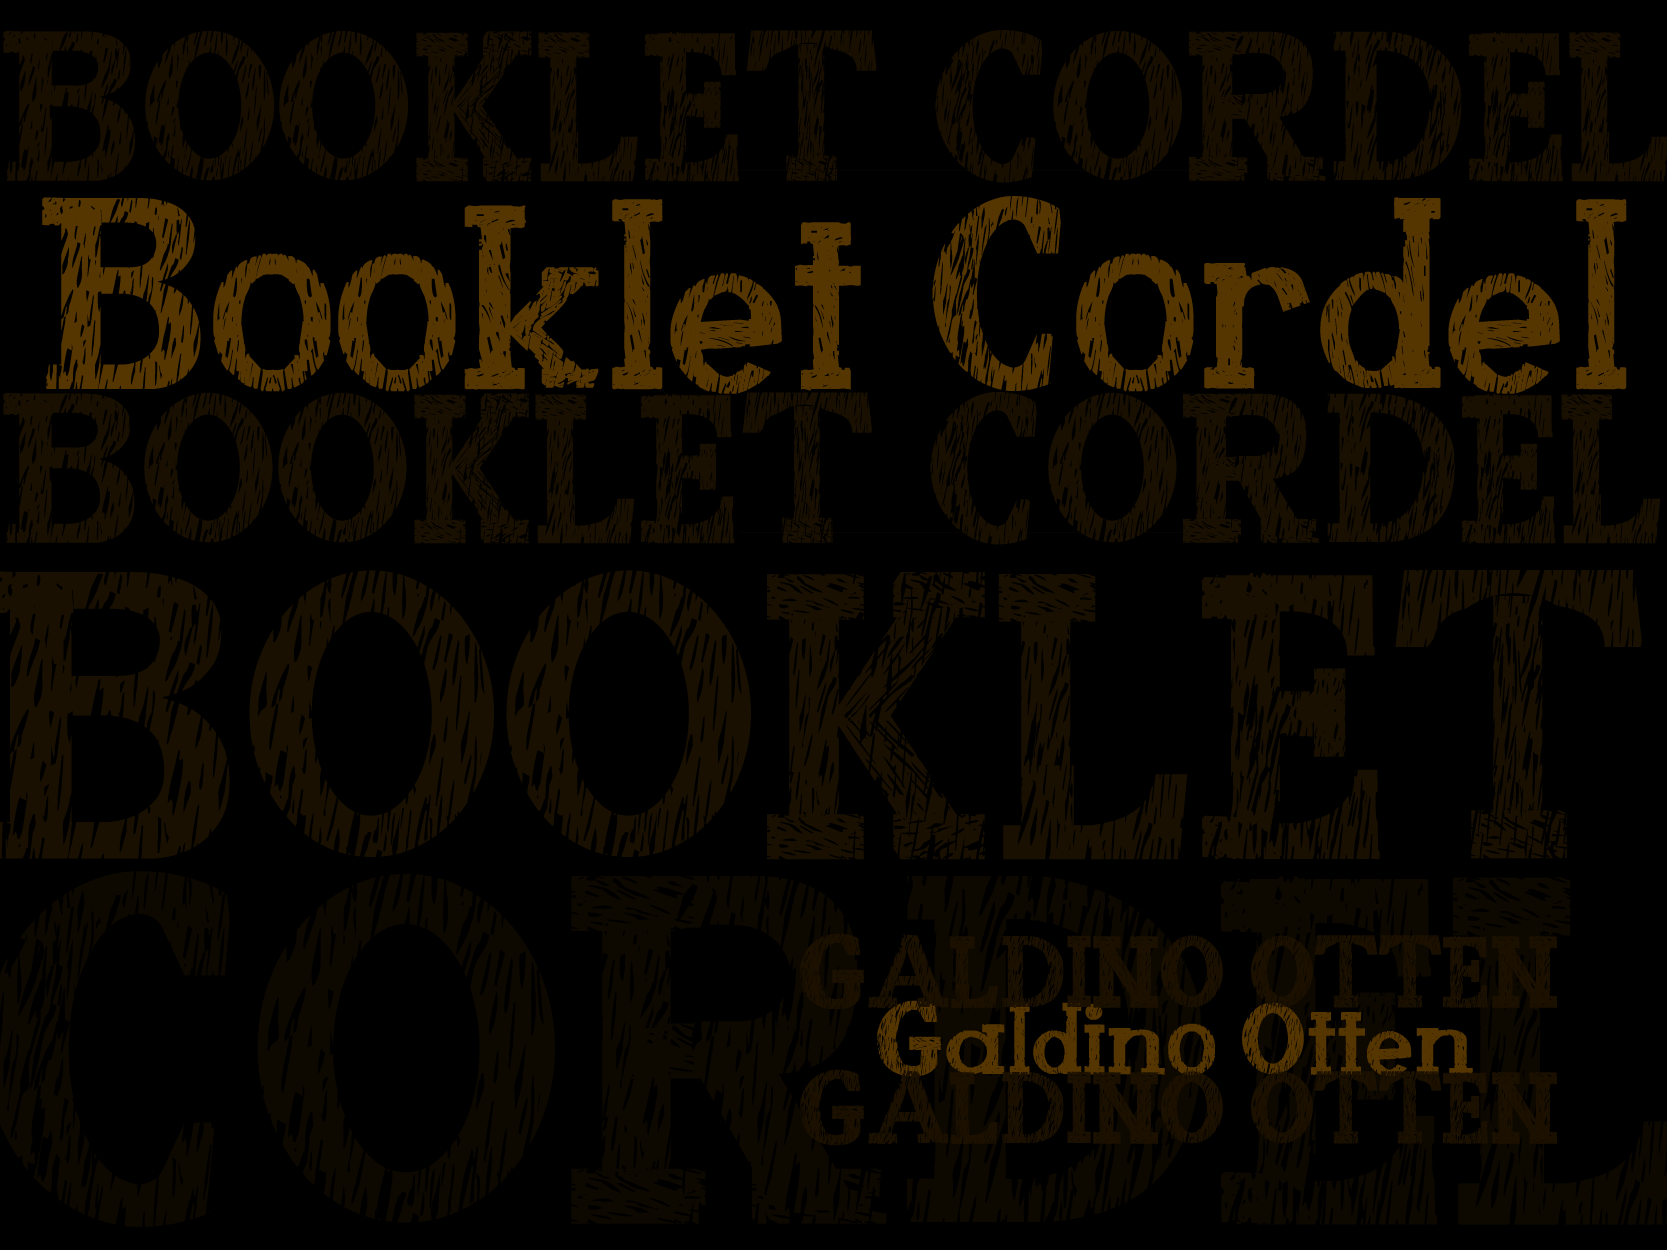 Booklet Cordel